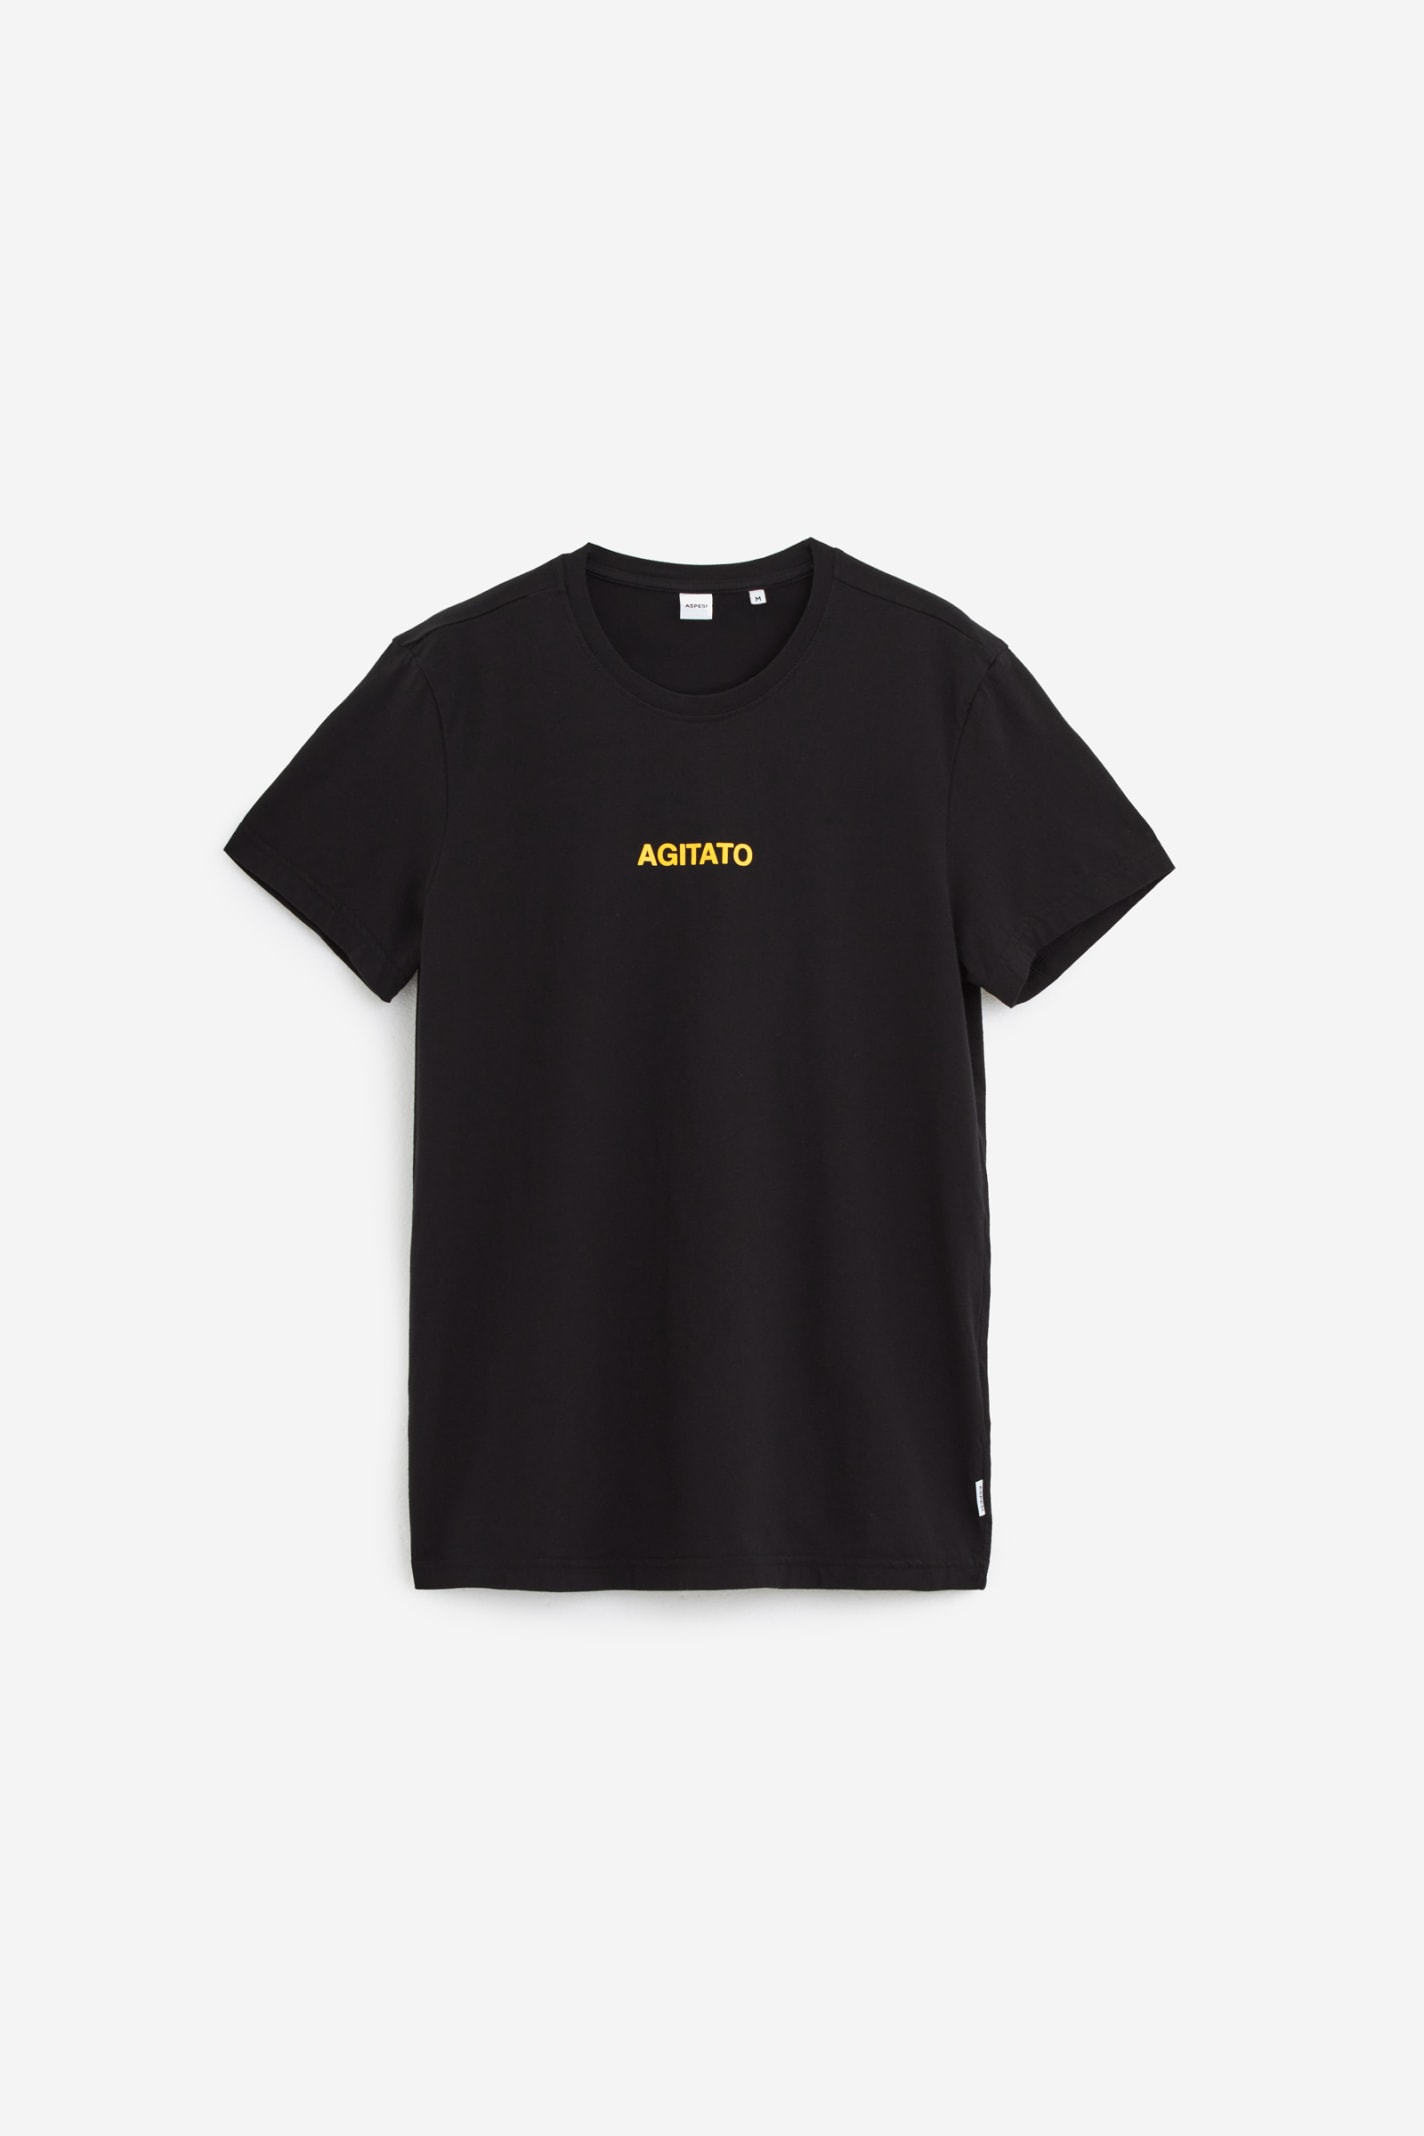 Shop Aspesi Agitato T-shirt In Black